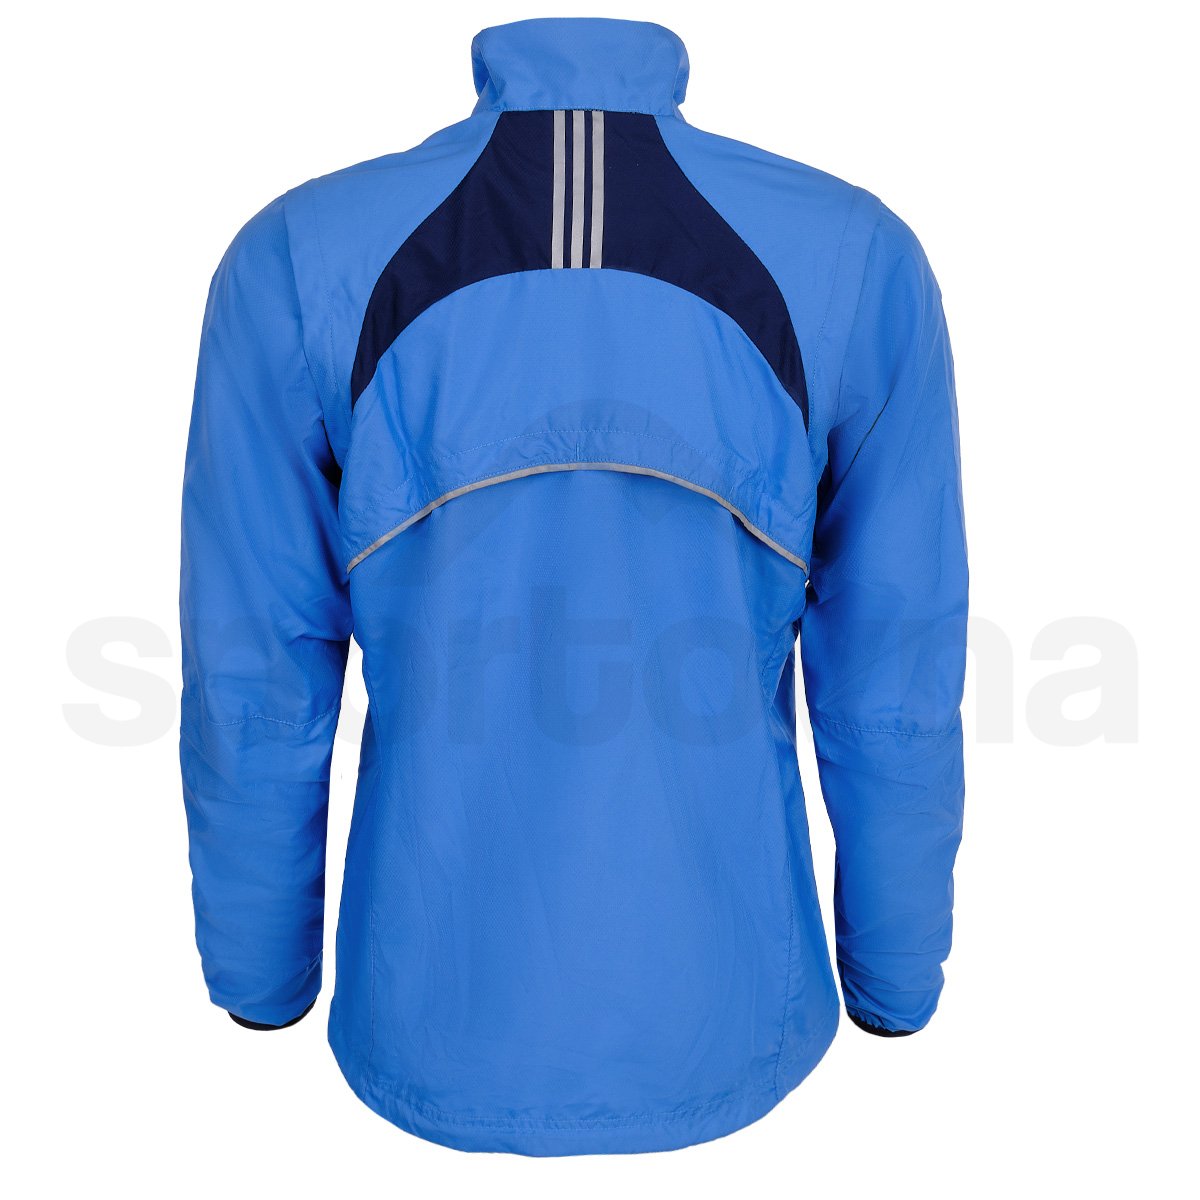 Dámská běžecká bunda Adidas ADI370796 W - modrá